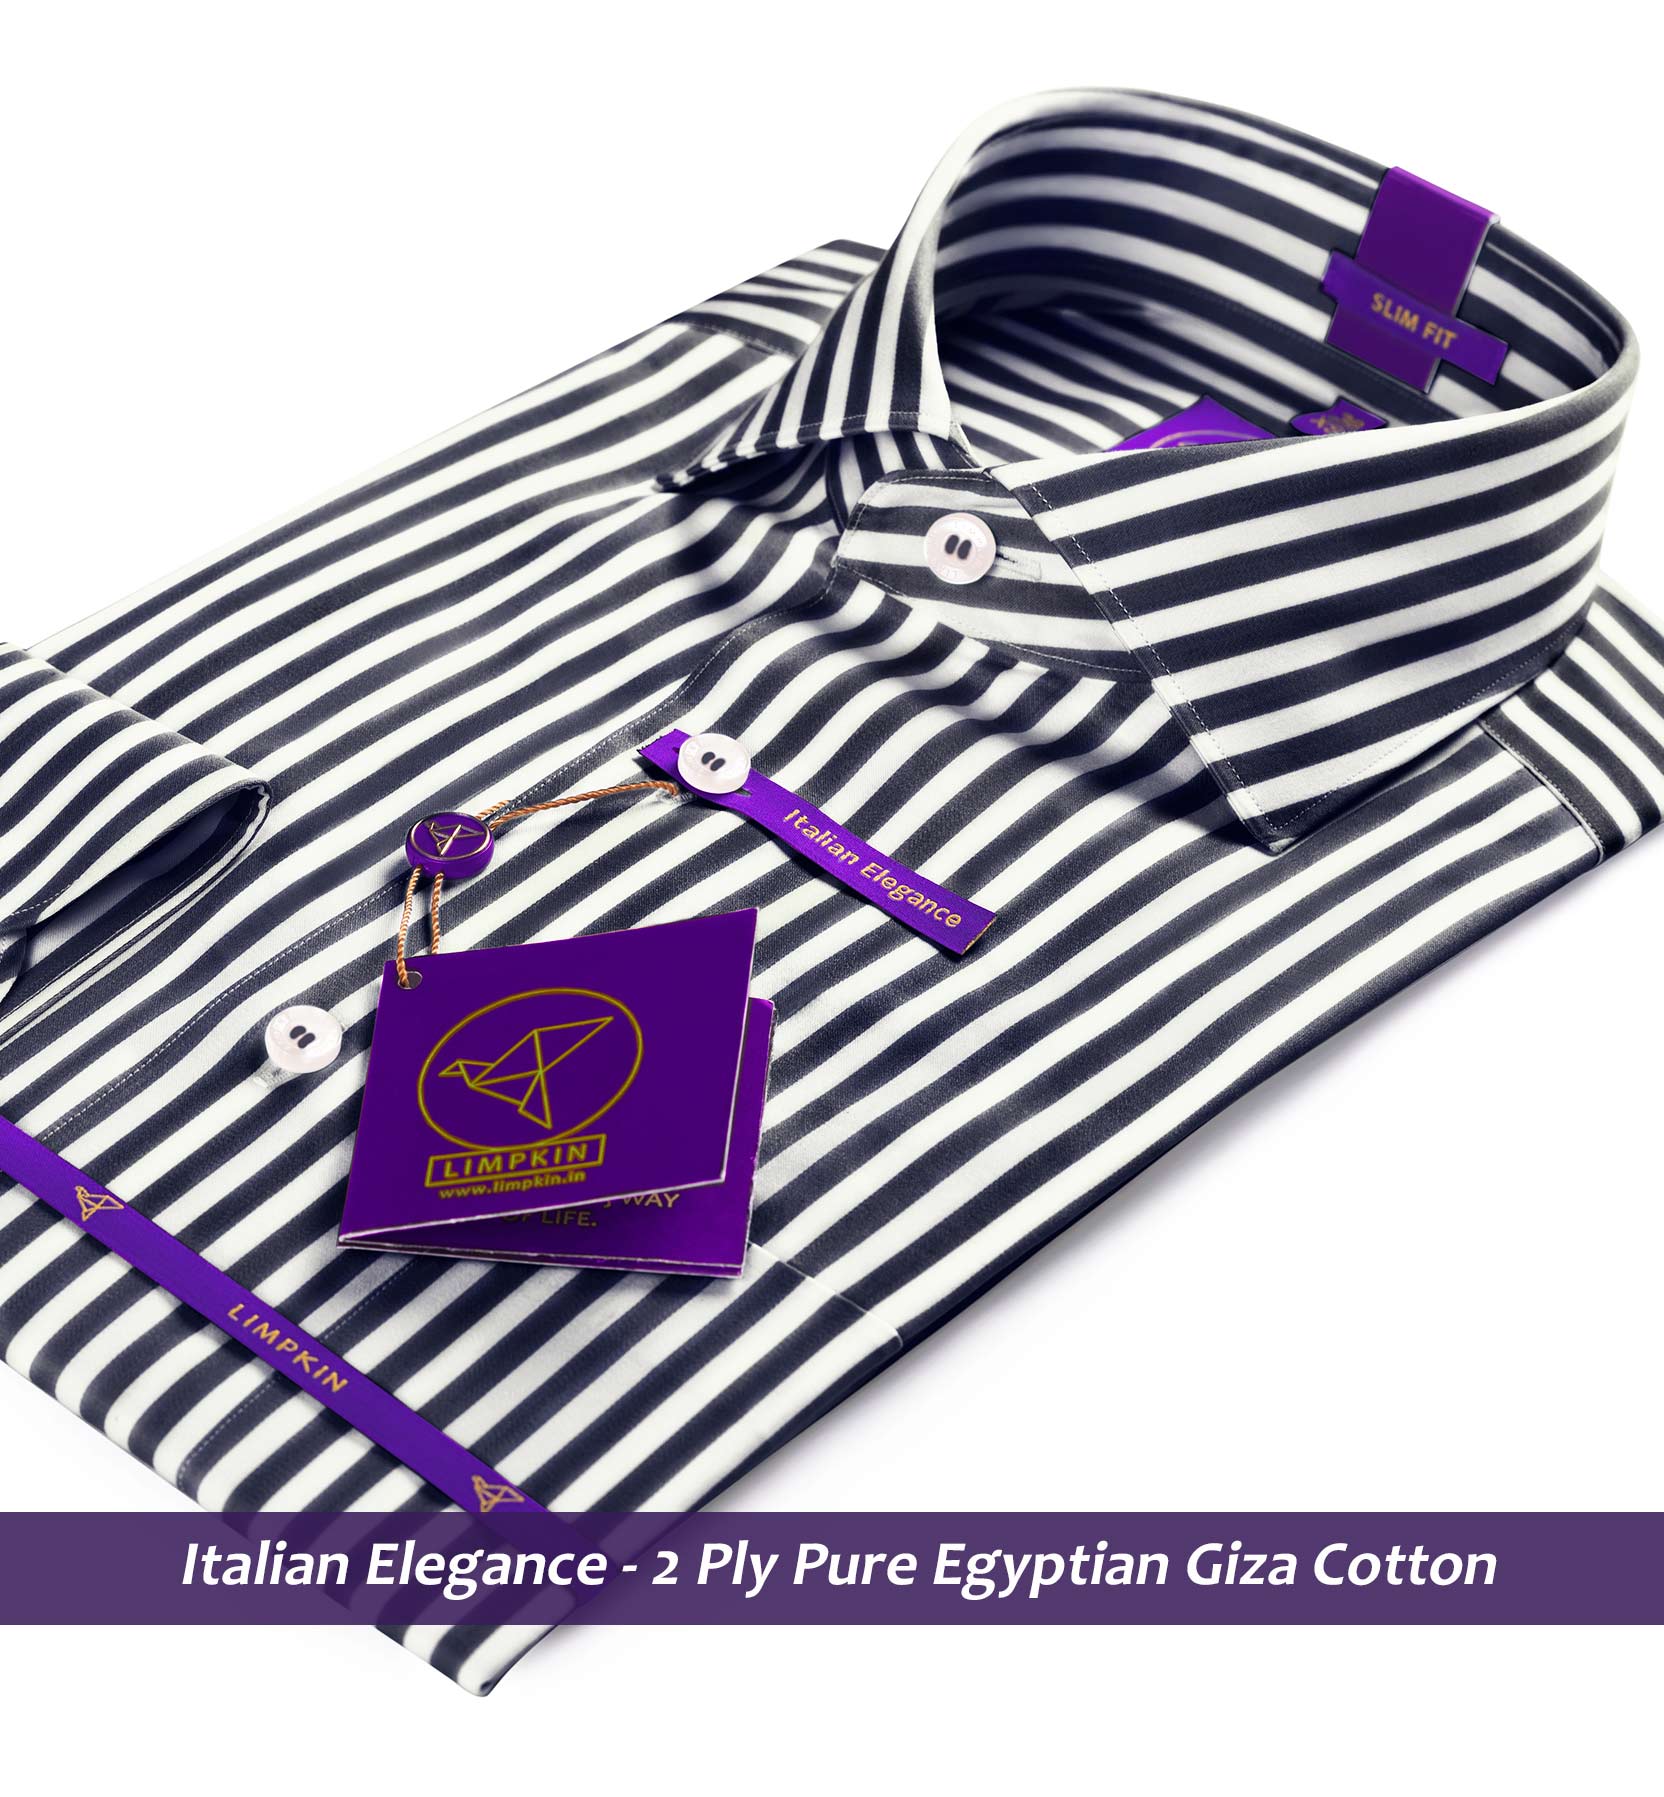 California- Ebony Black & White Magical Stripe- 2 Ply Pure Egyptian Giza Cotton